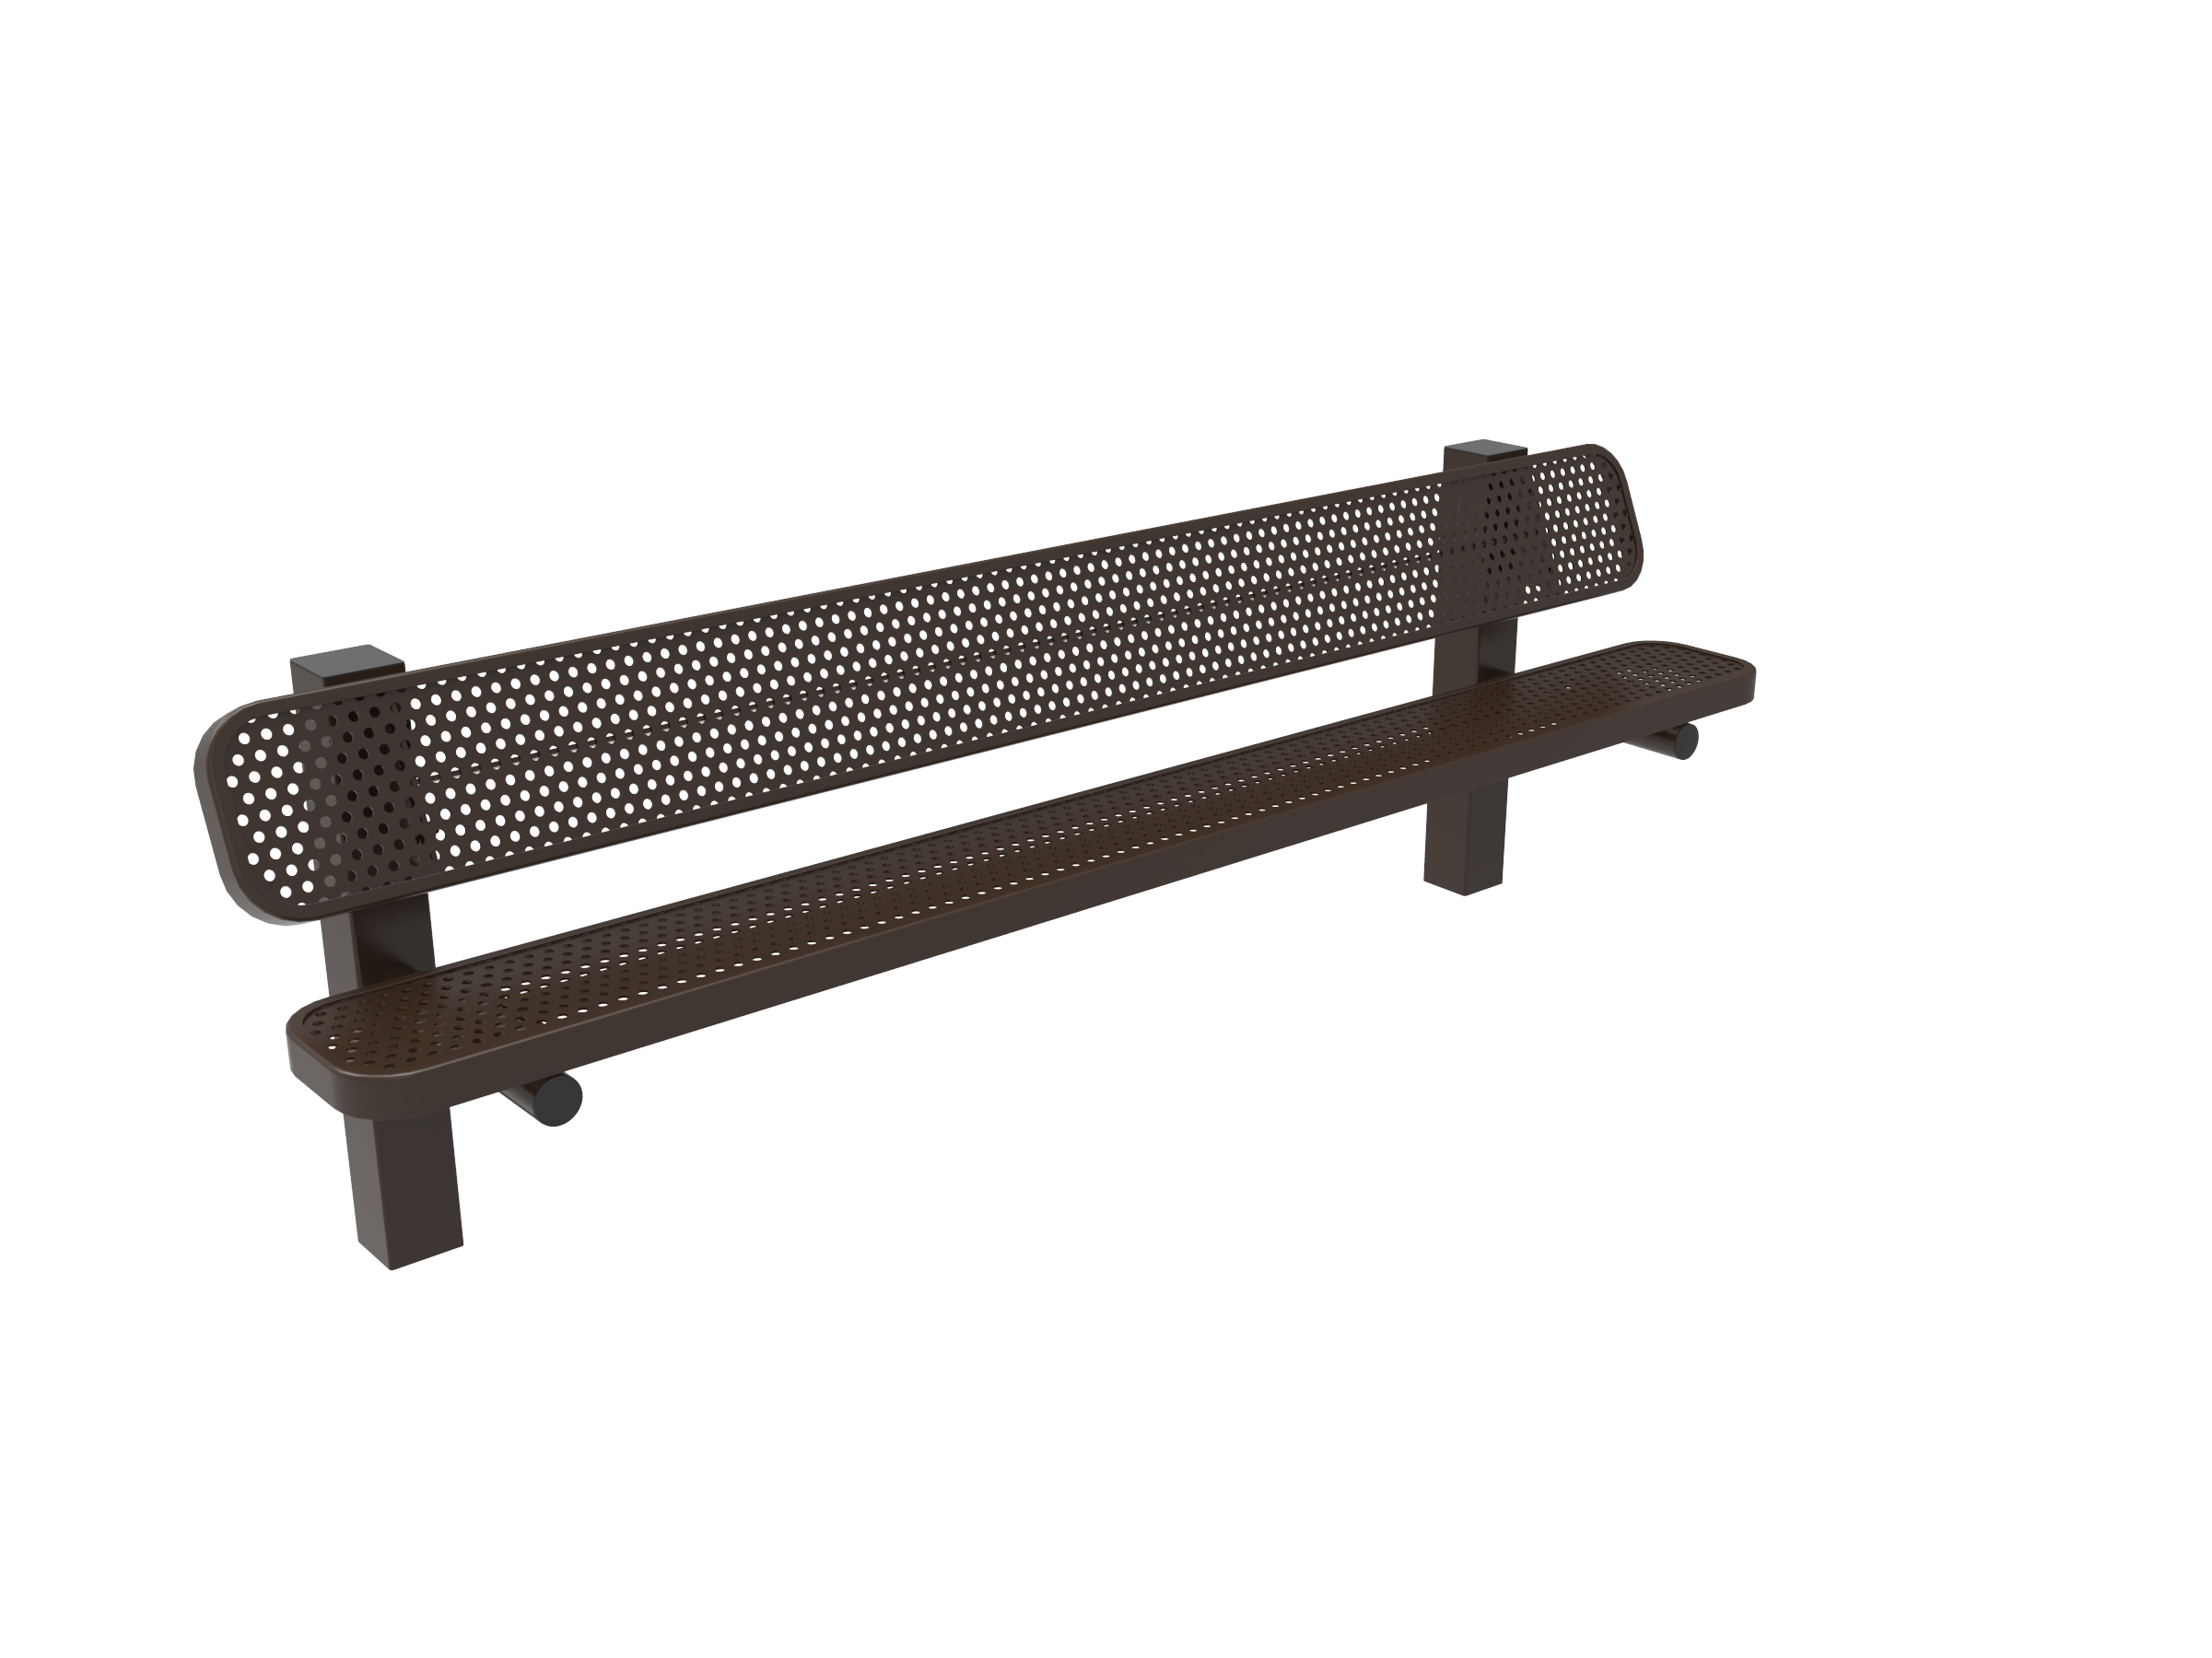 8′ Single Pedestal Bench-Punched
BRT08-D-61-000
Industry Standard Finish
$899.00
BRT08-B-61-000
Advantage Premium Finish
$1129.00
